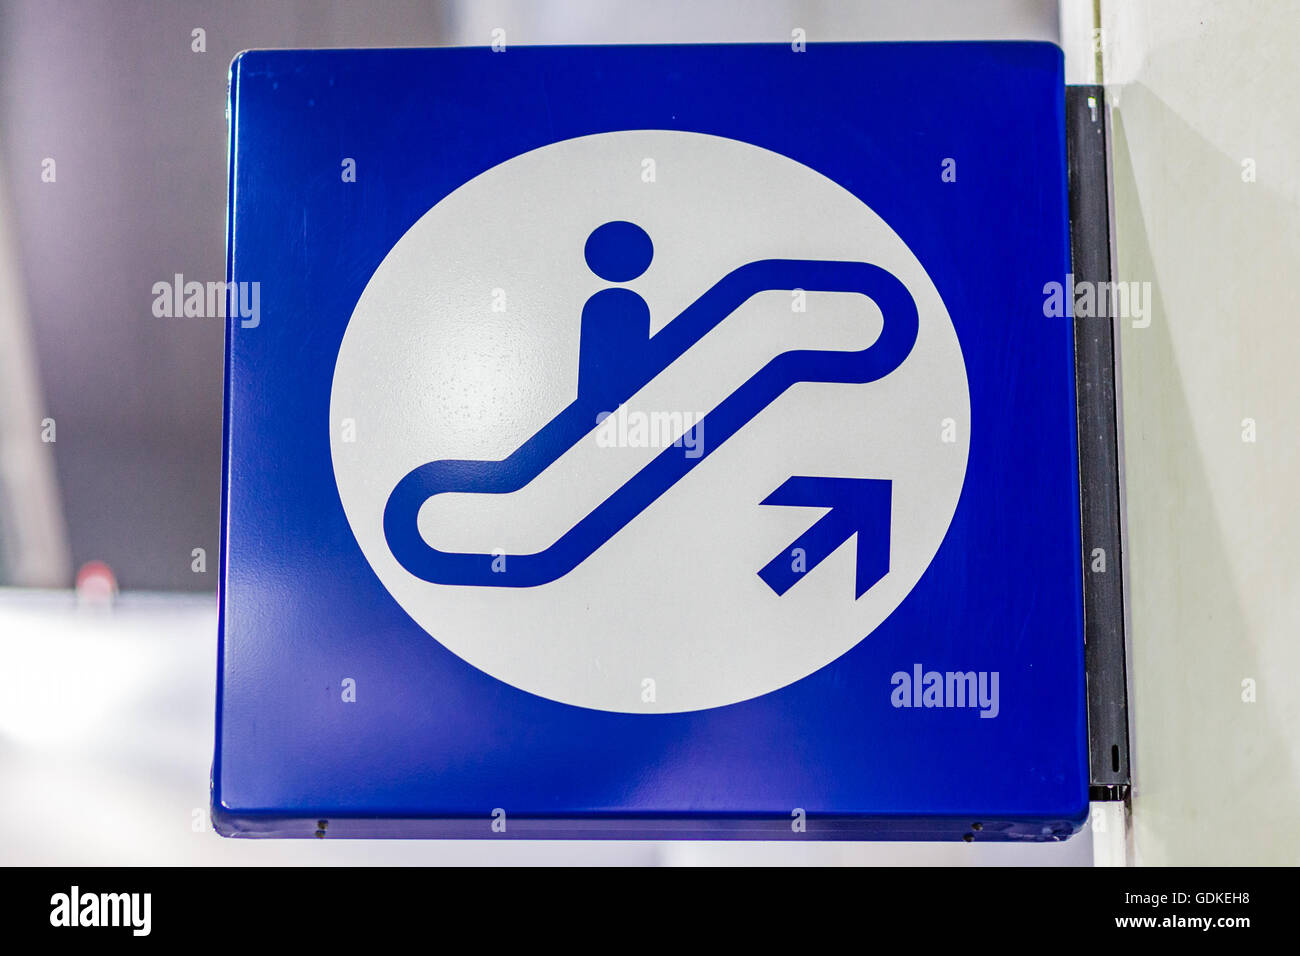 generic blue sign for escalators Stock Photo